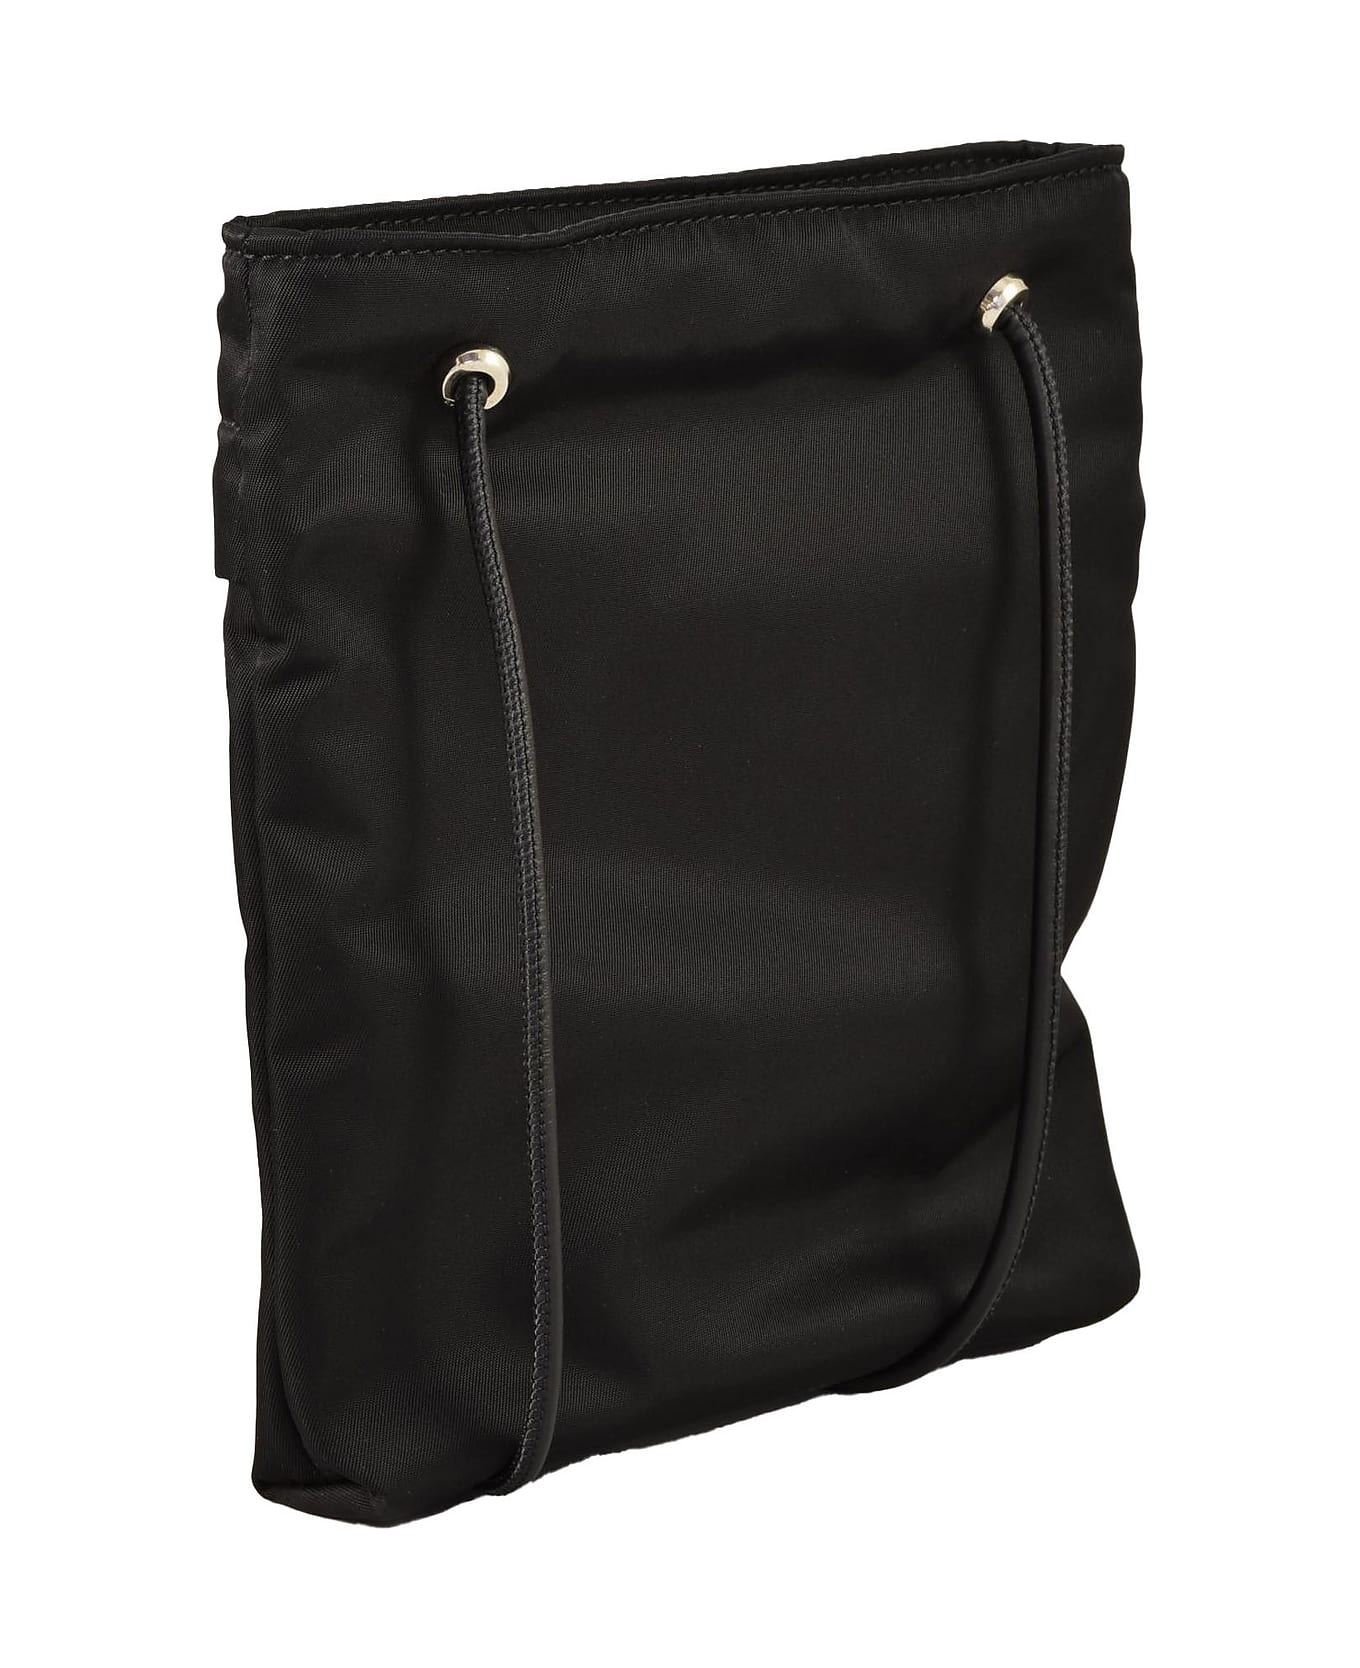 Givenchy Men's Black Handbag - Black